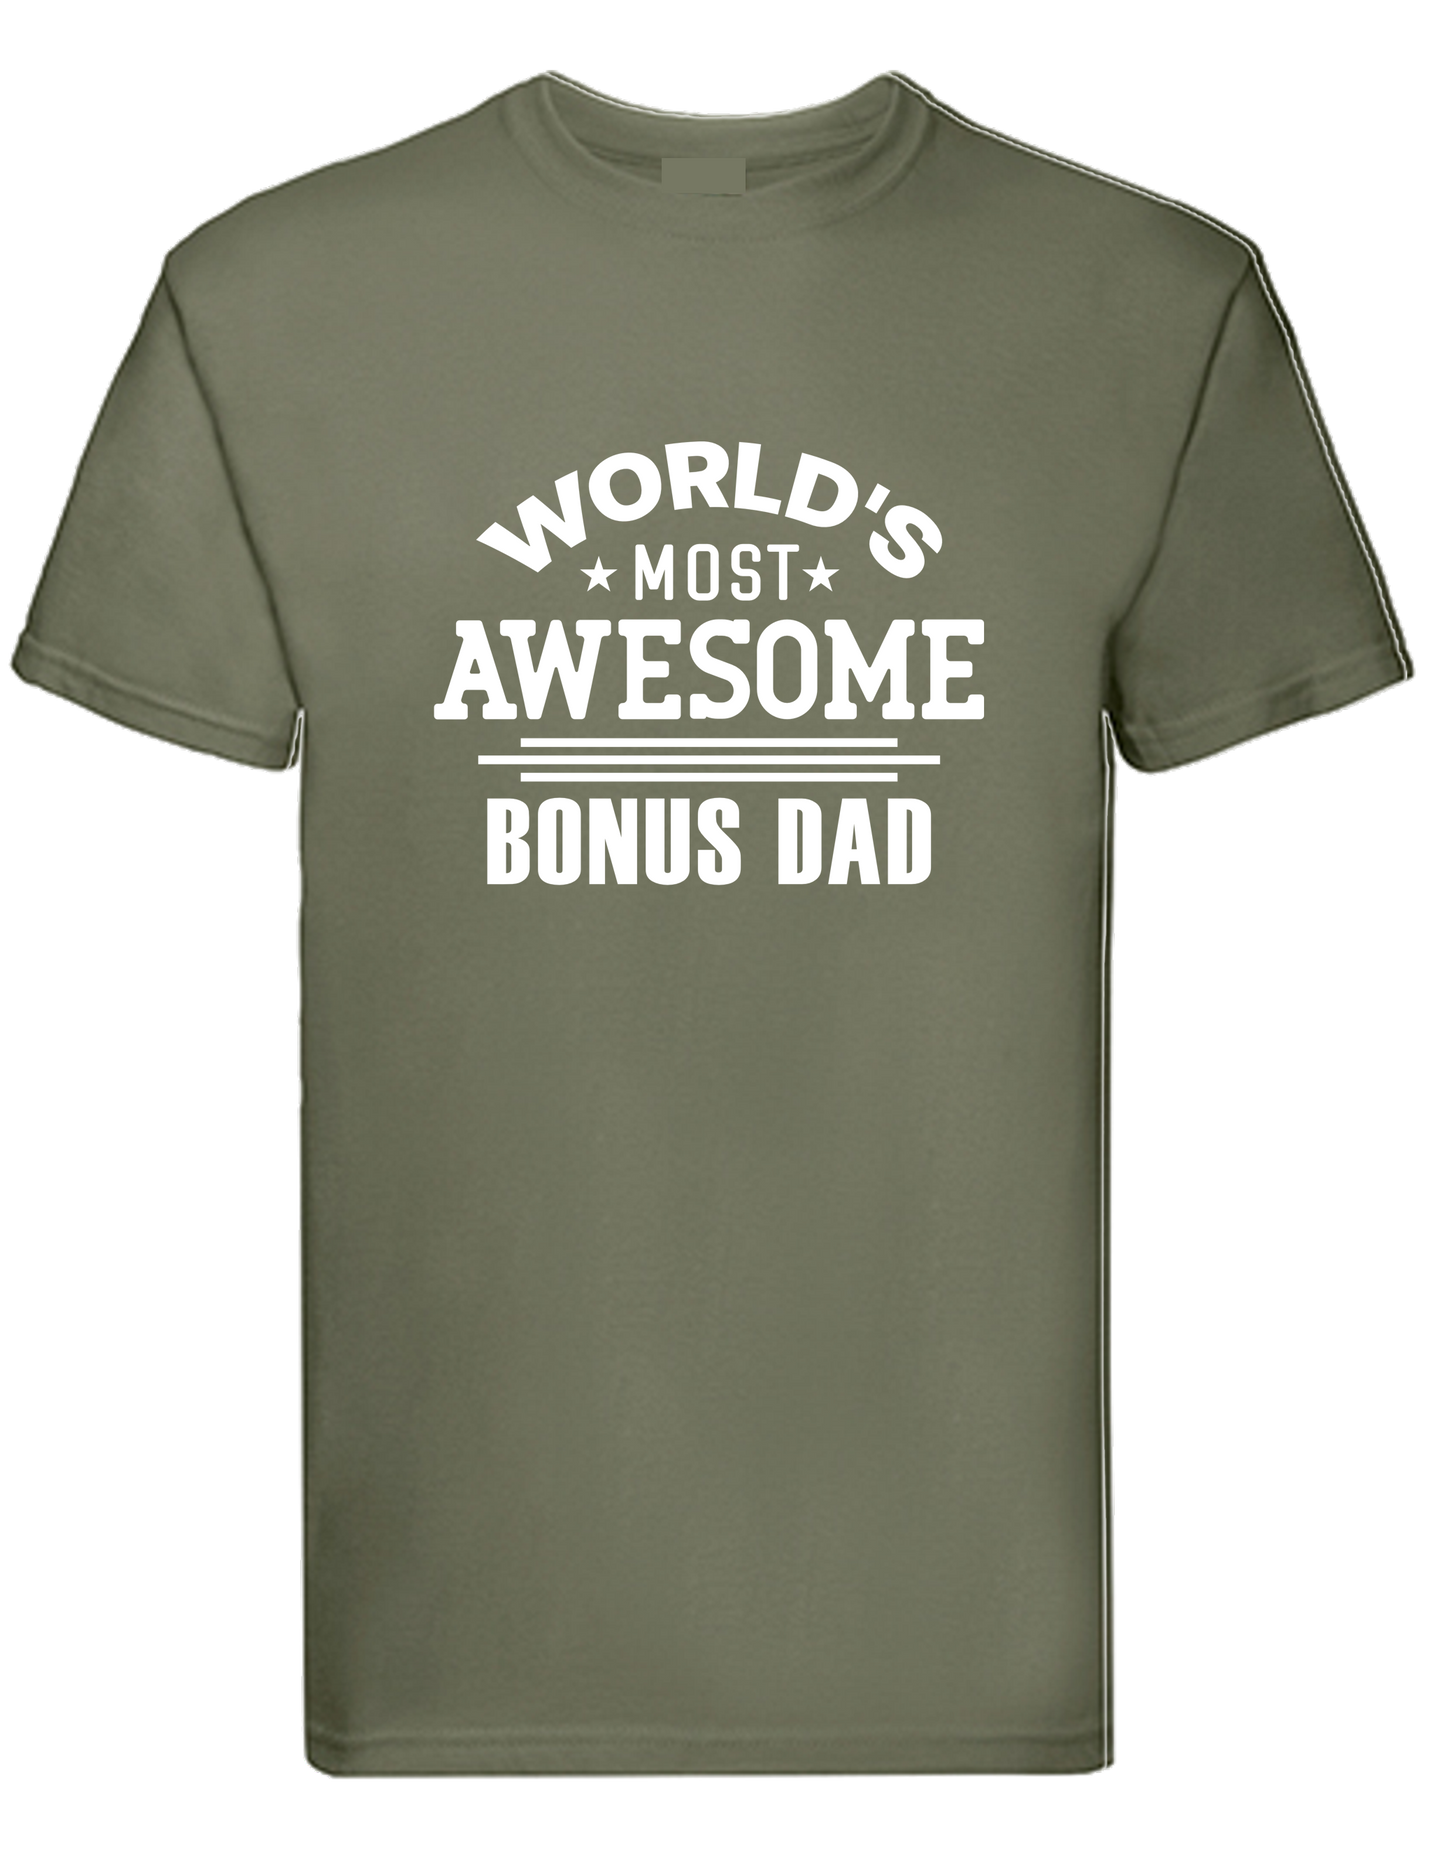 Awesome bonus dad